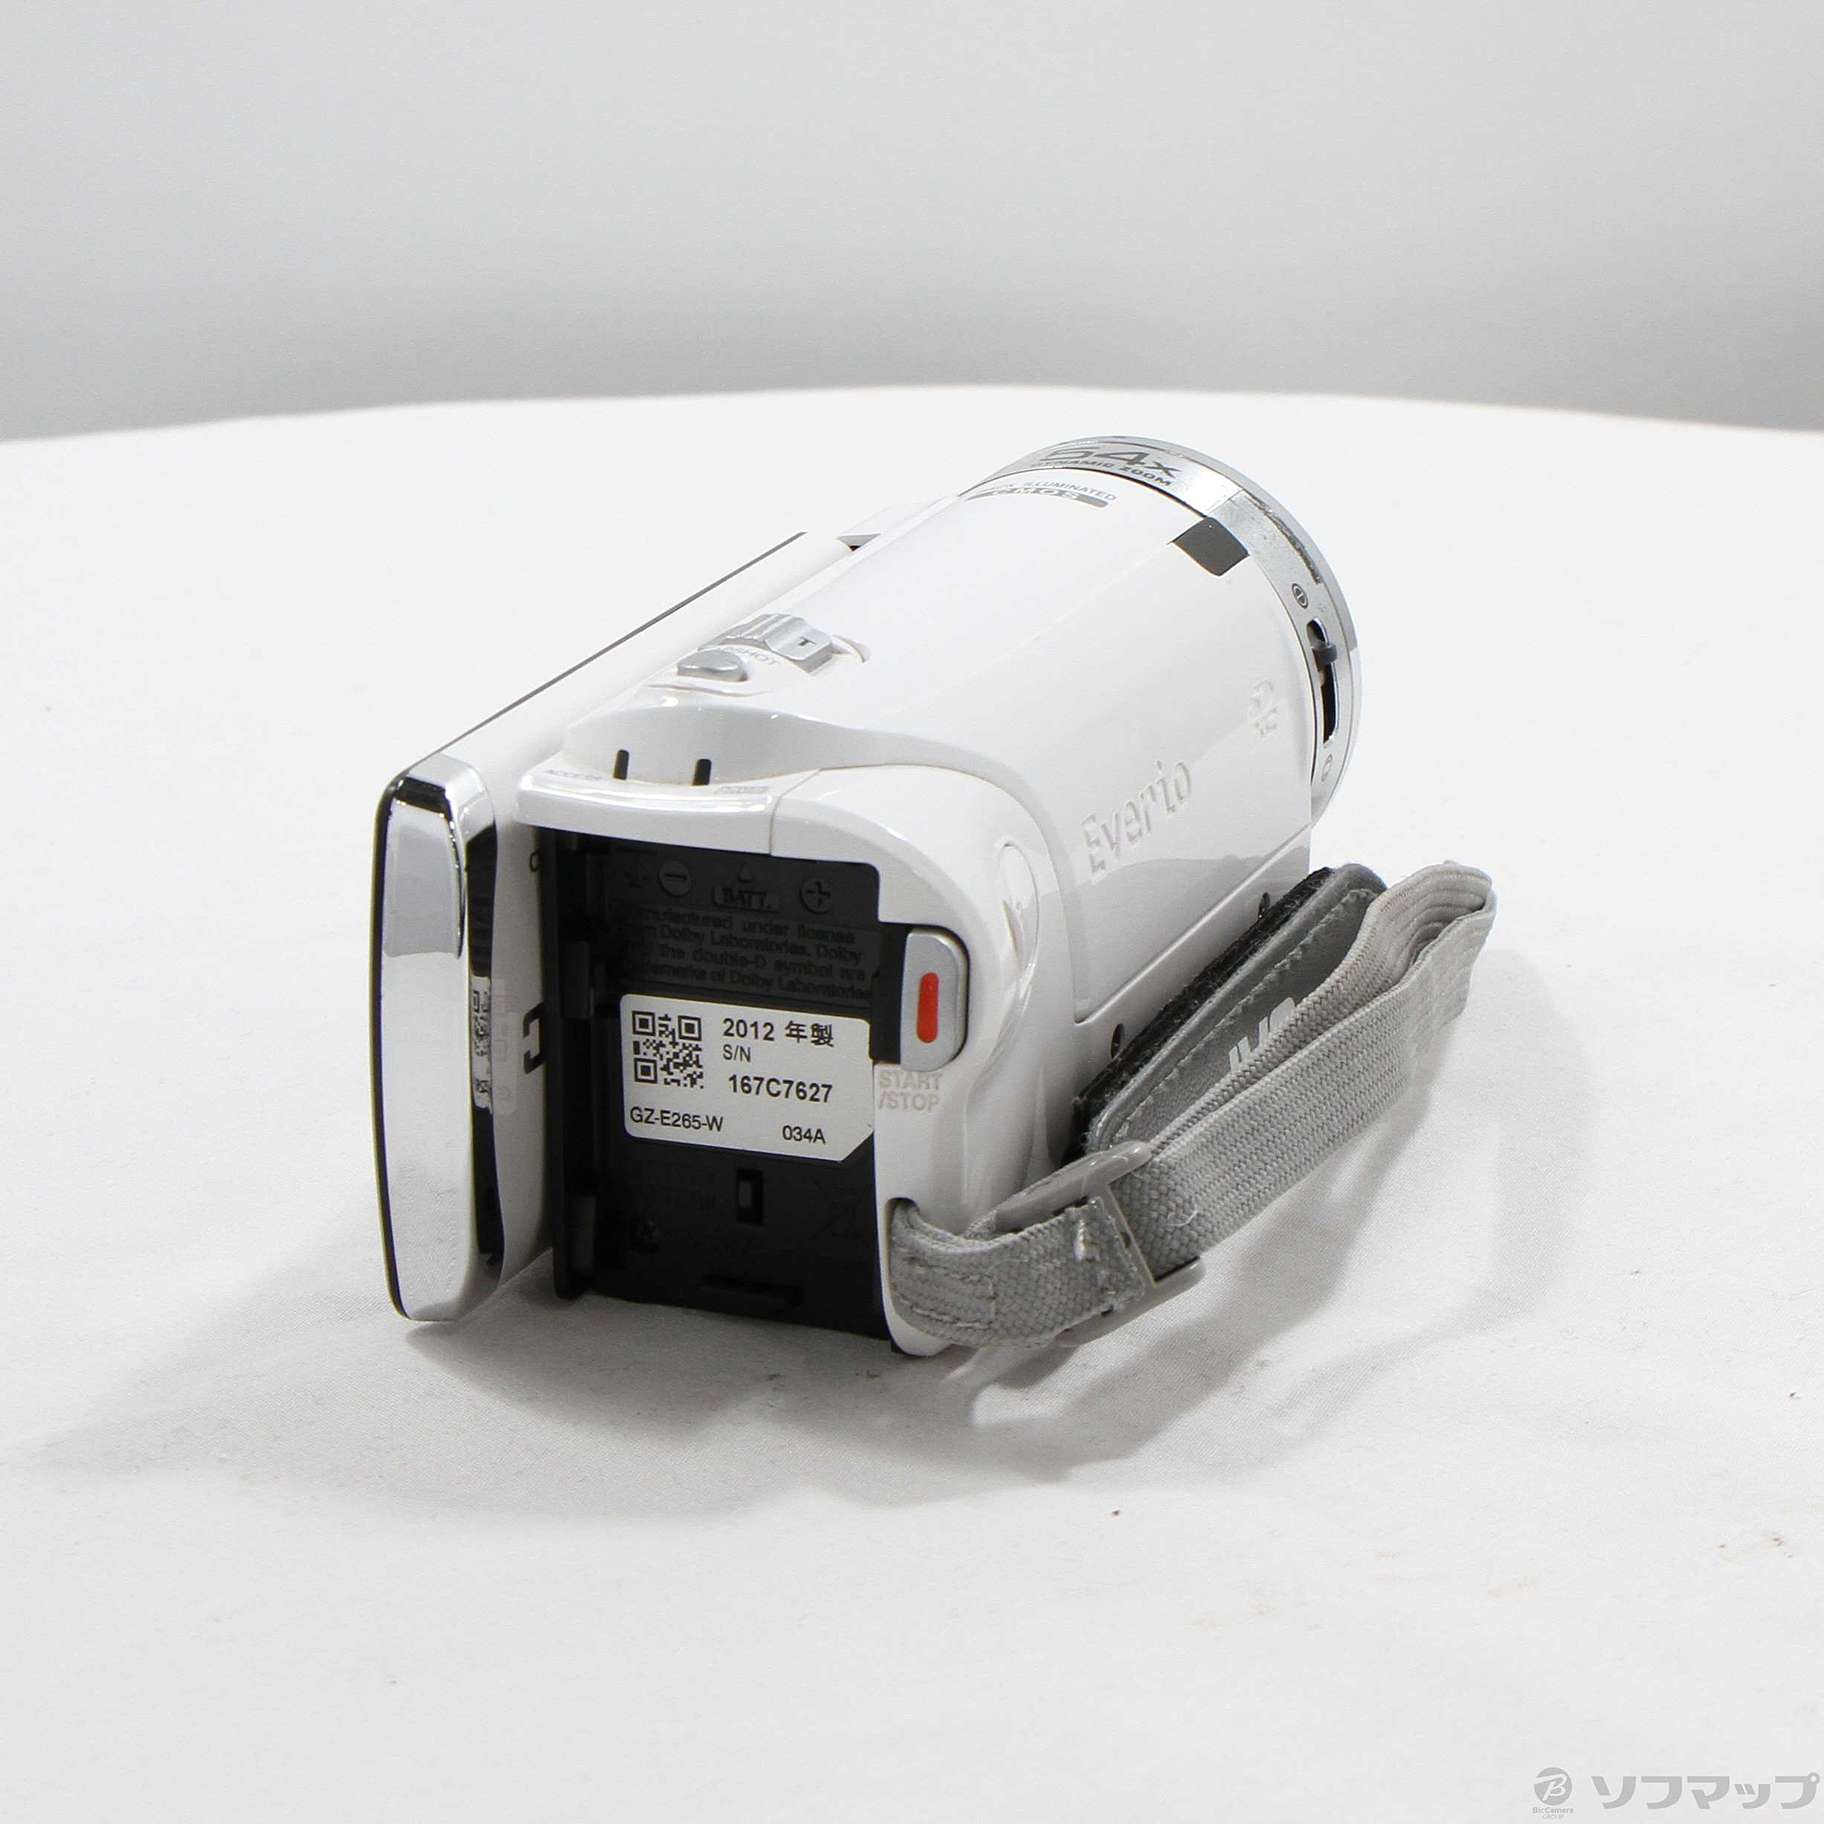 Victor・JVC GZ-E265-W ※ＡＣアダプターなし - ビデオカメラ